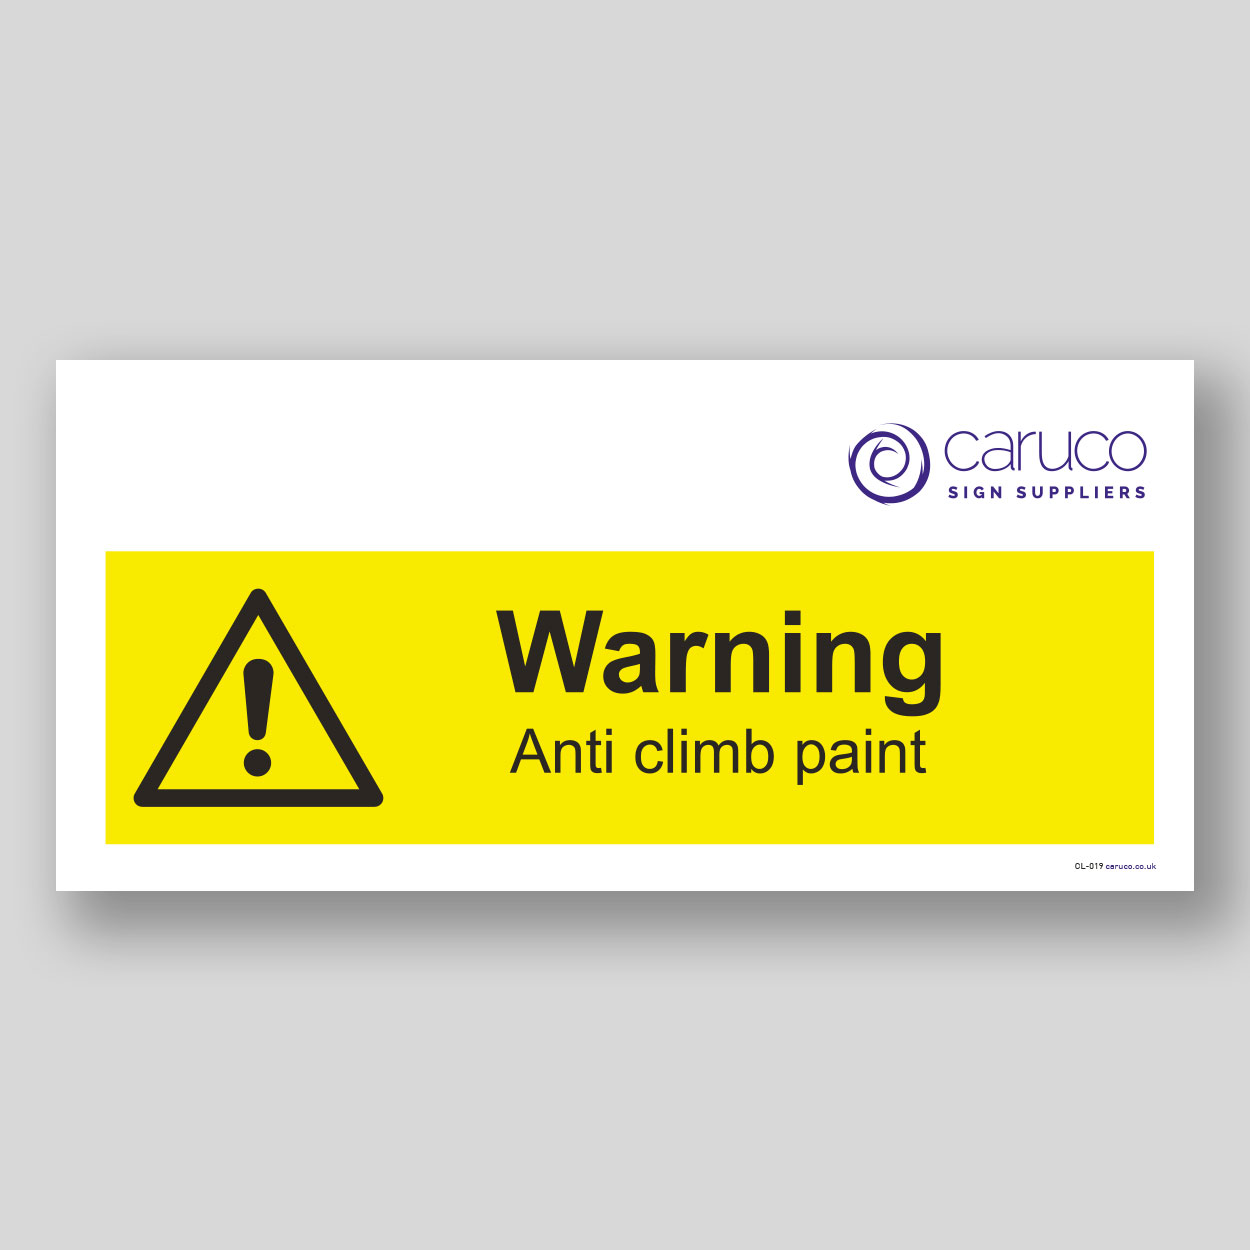 CL-019 Warning - anti climb paint